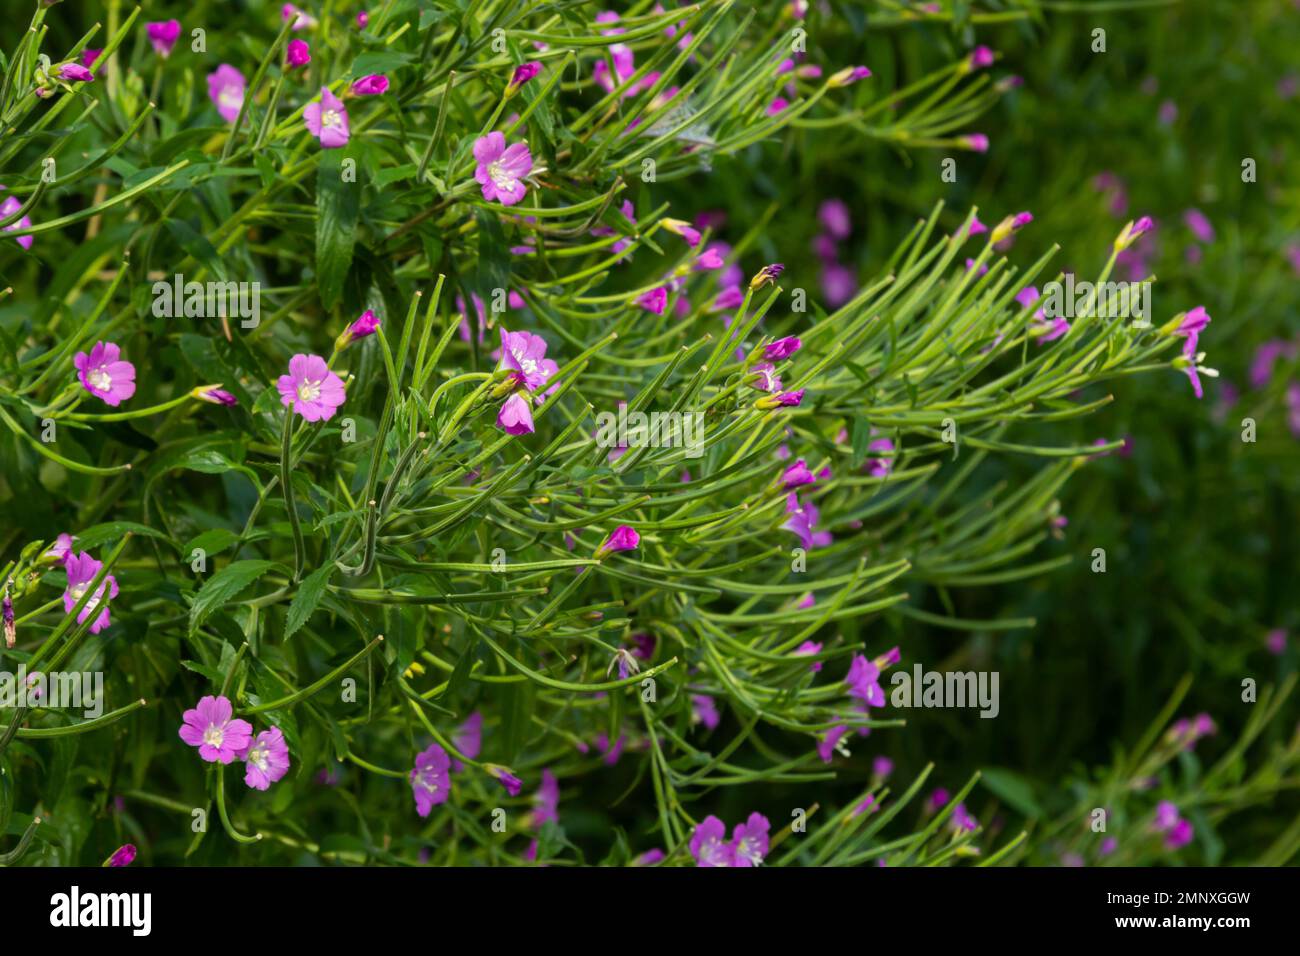 willow-herb epilobium hirsutum during flowering. Medicinal plant with red flowers. Stock Photo